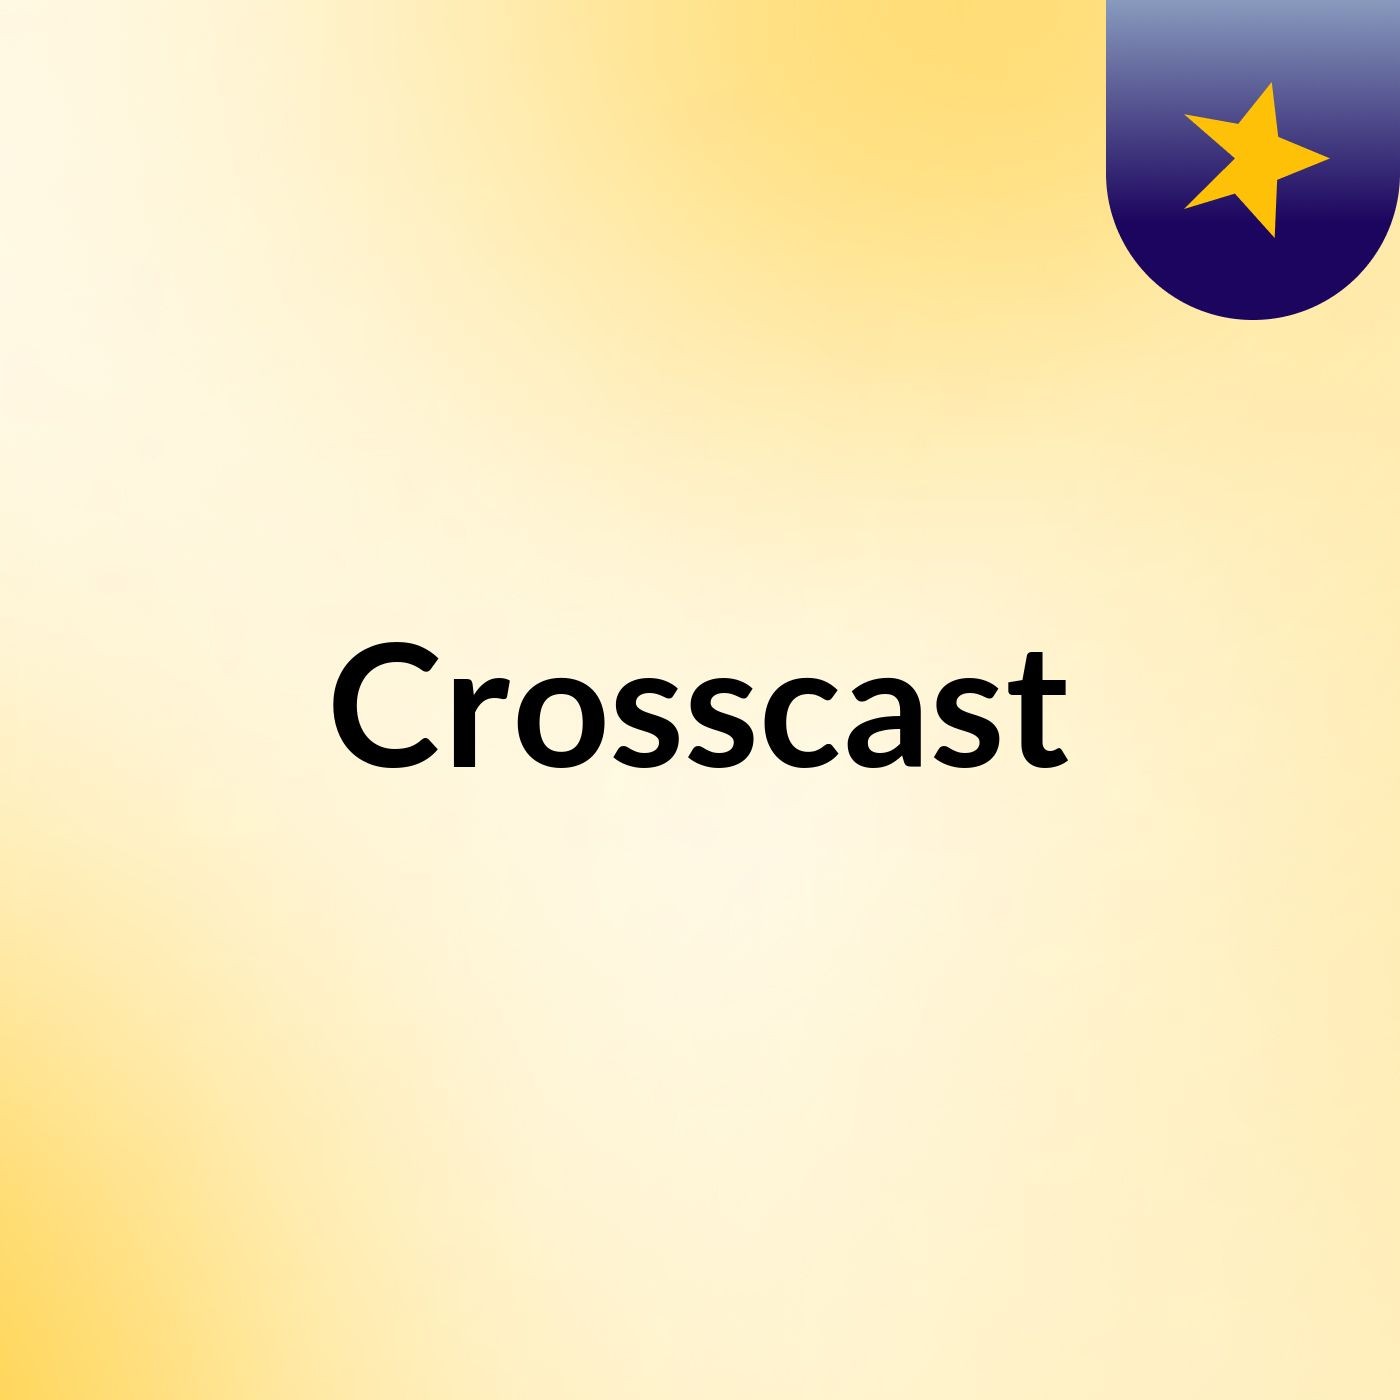 Crosscast